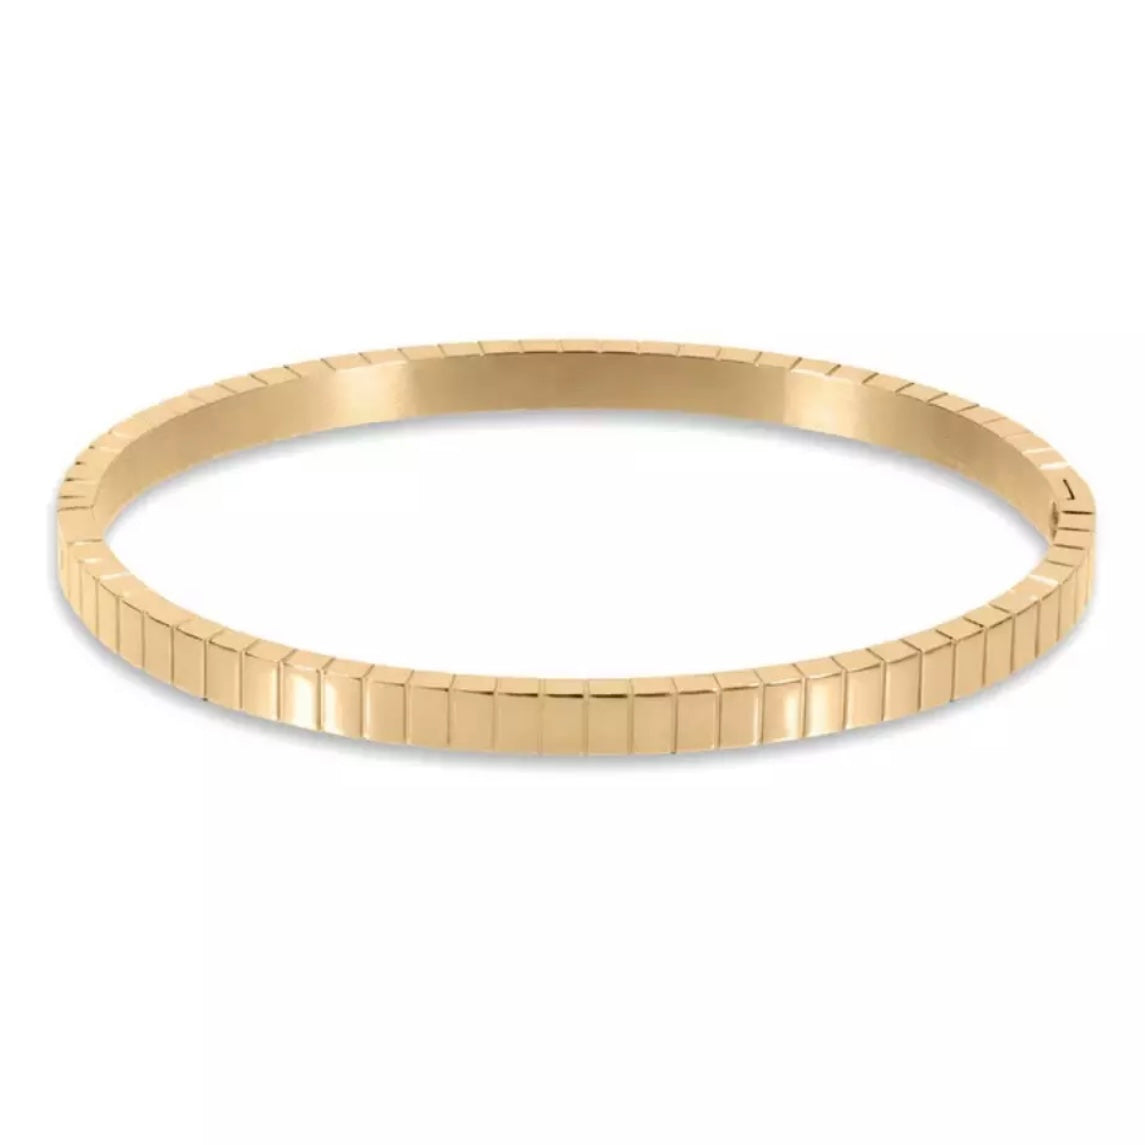 Affordable Heart Design Slider Bracelets: Delicate Charm in Light Gold Look  B26003